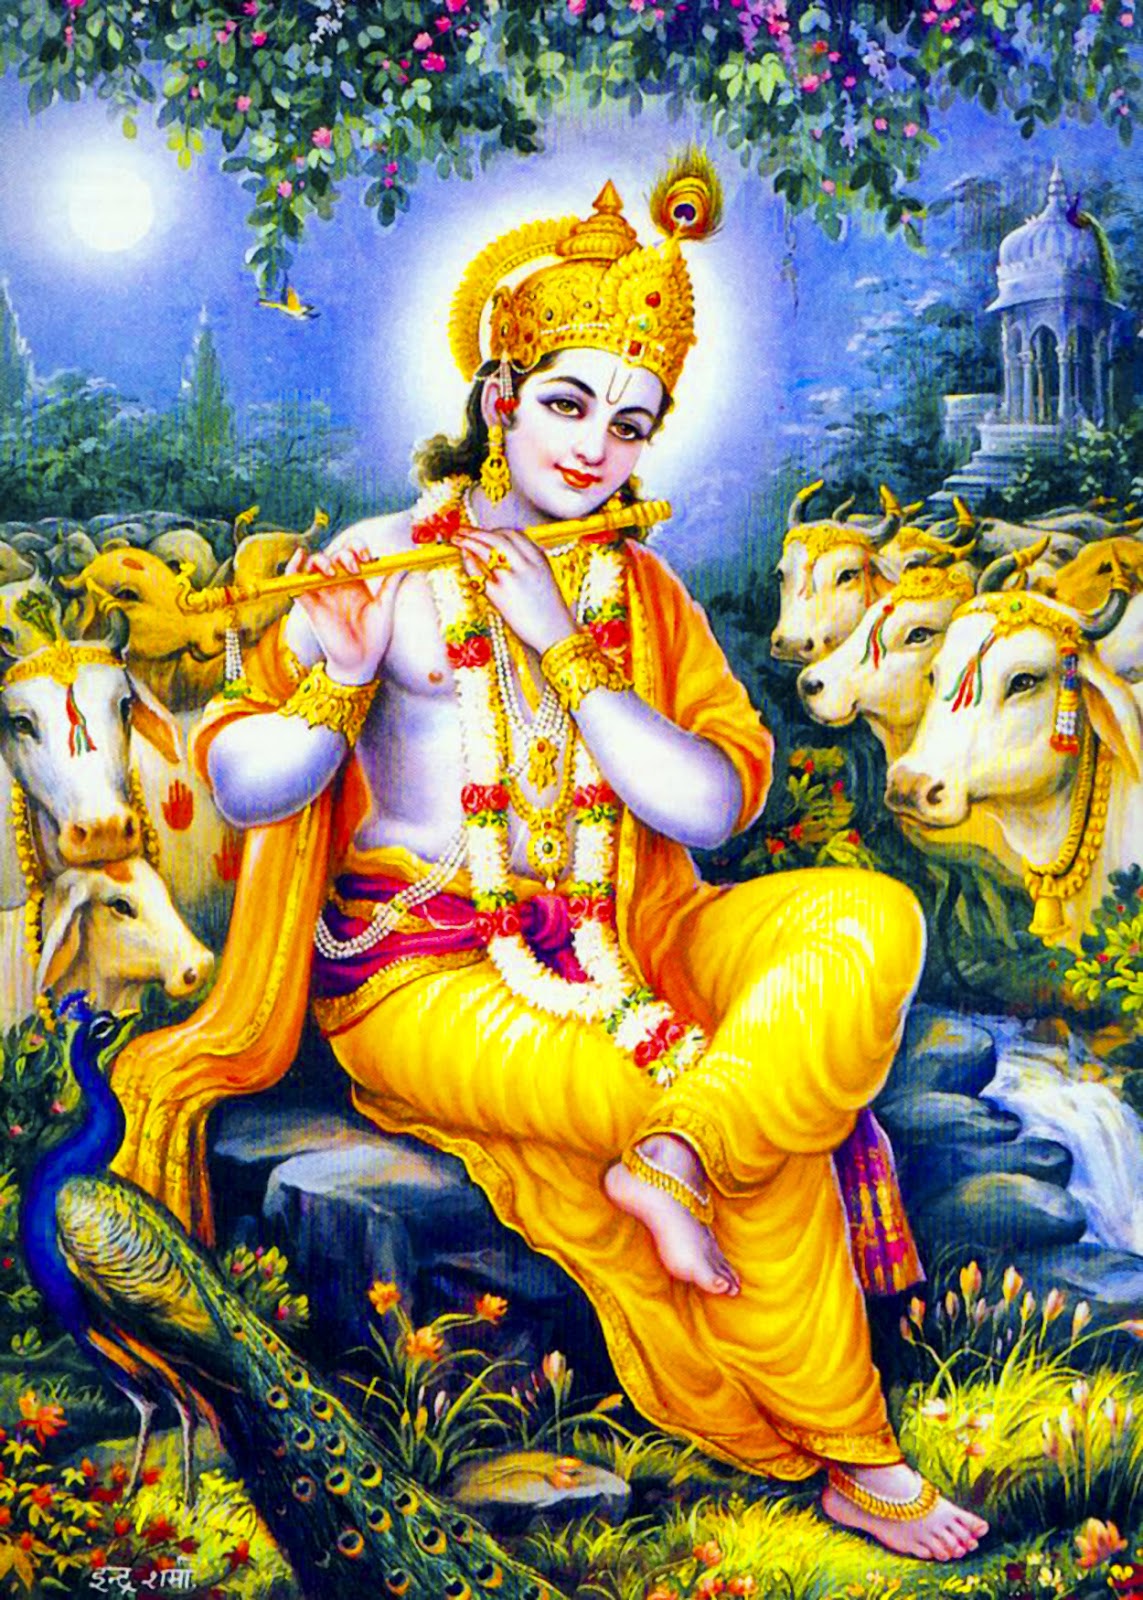 god wallpaper free download: Murlidhar photo | Lord krishna hd wallpaper, Lord  krishna images, Radha krishna art